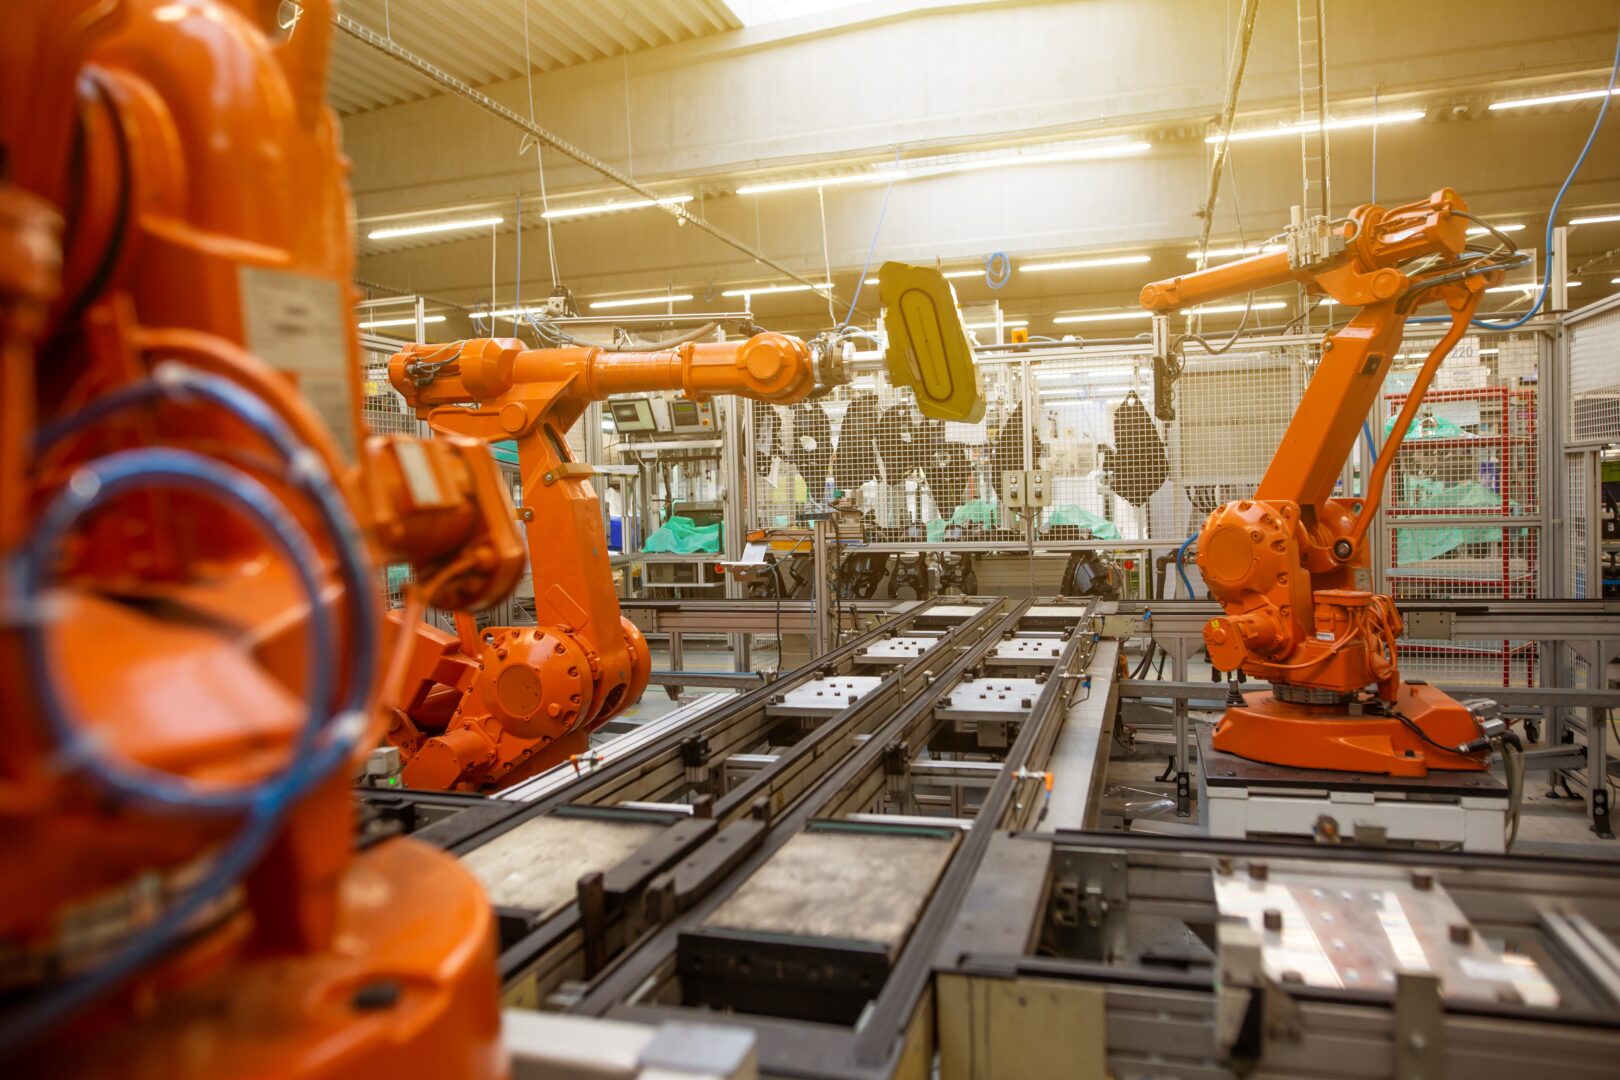 Mobile, flexible robotic welding system to reshape the European shipbuilding industry